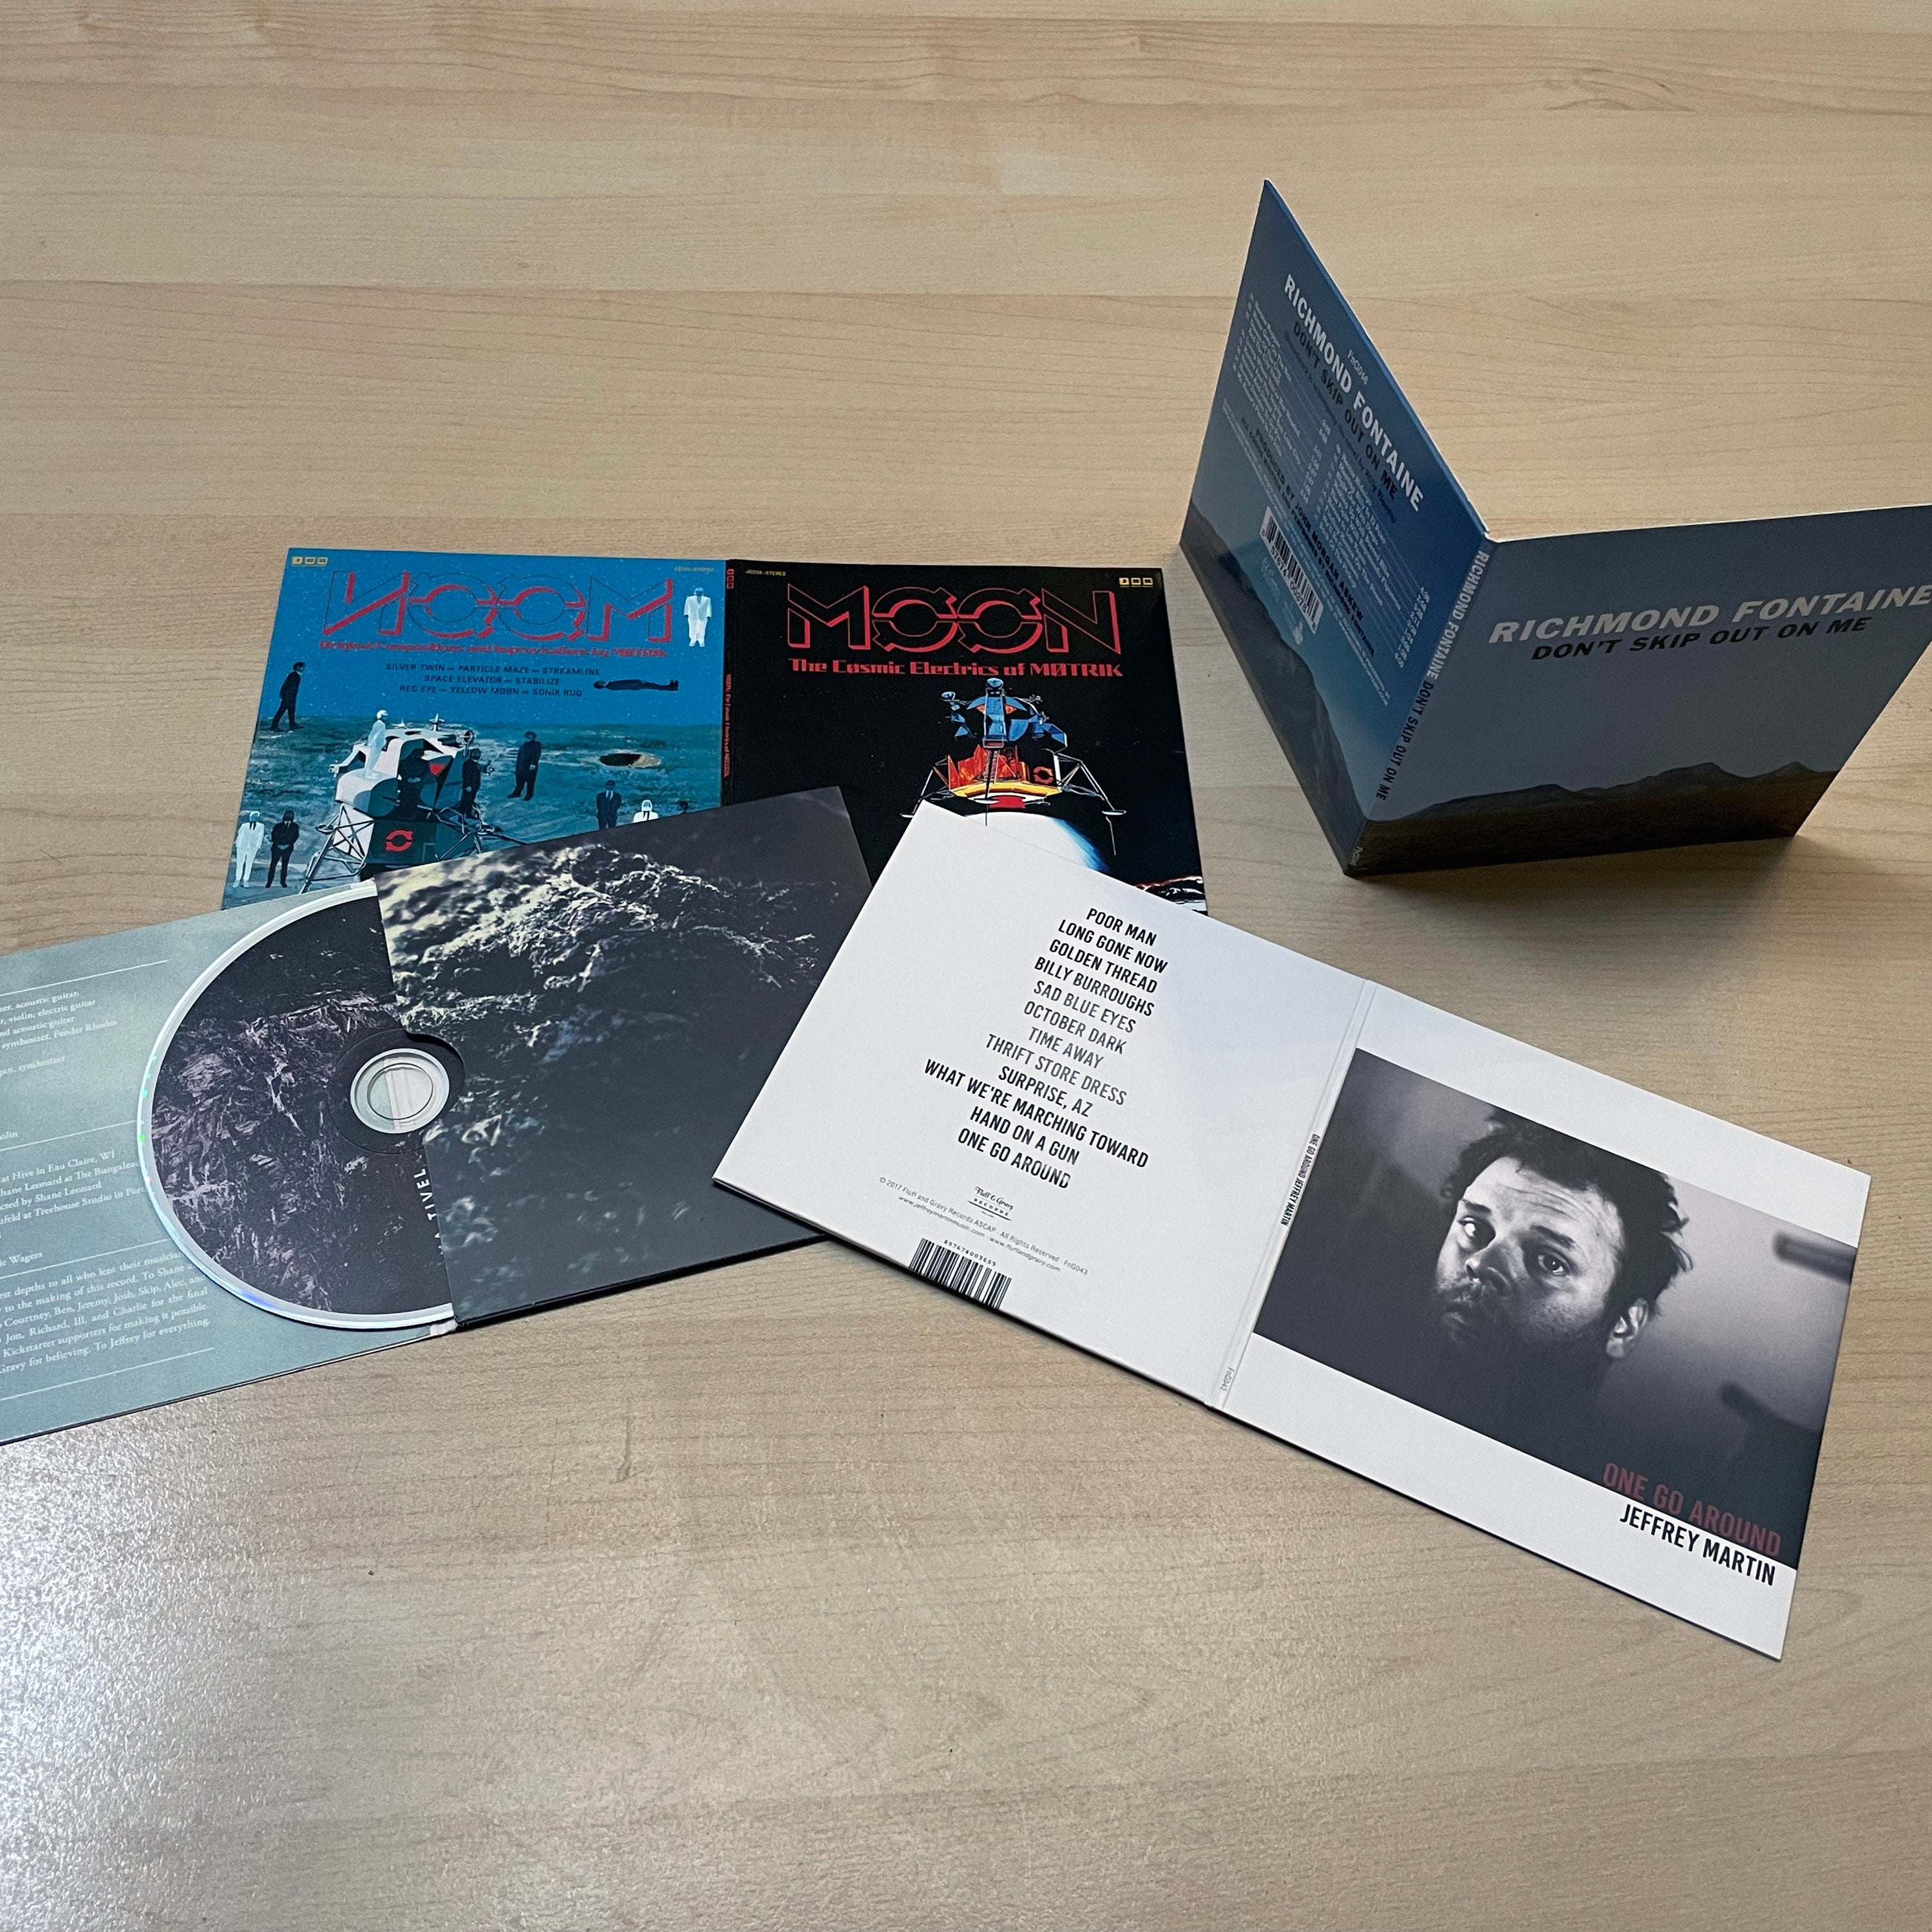 Vinyl, CD & Merch Bundles - Bundle B - 300 CD